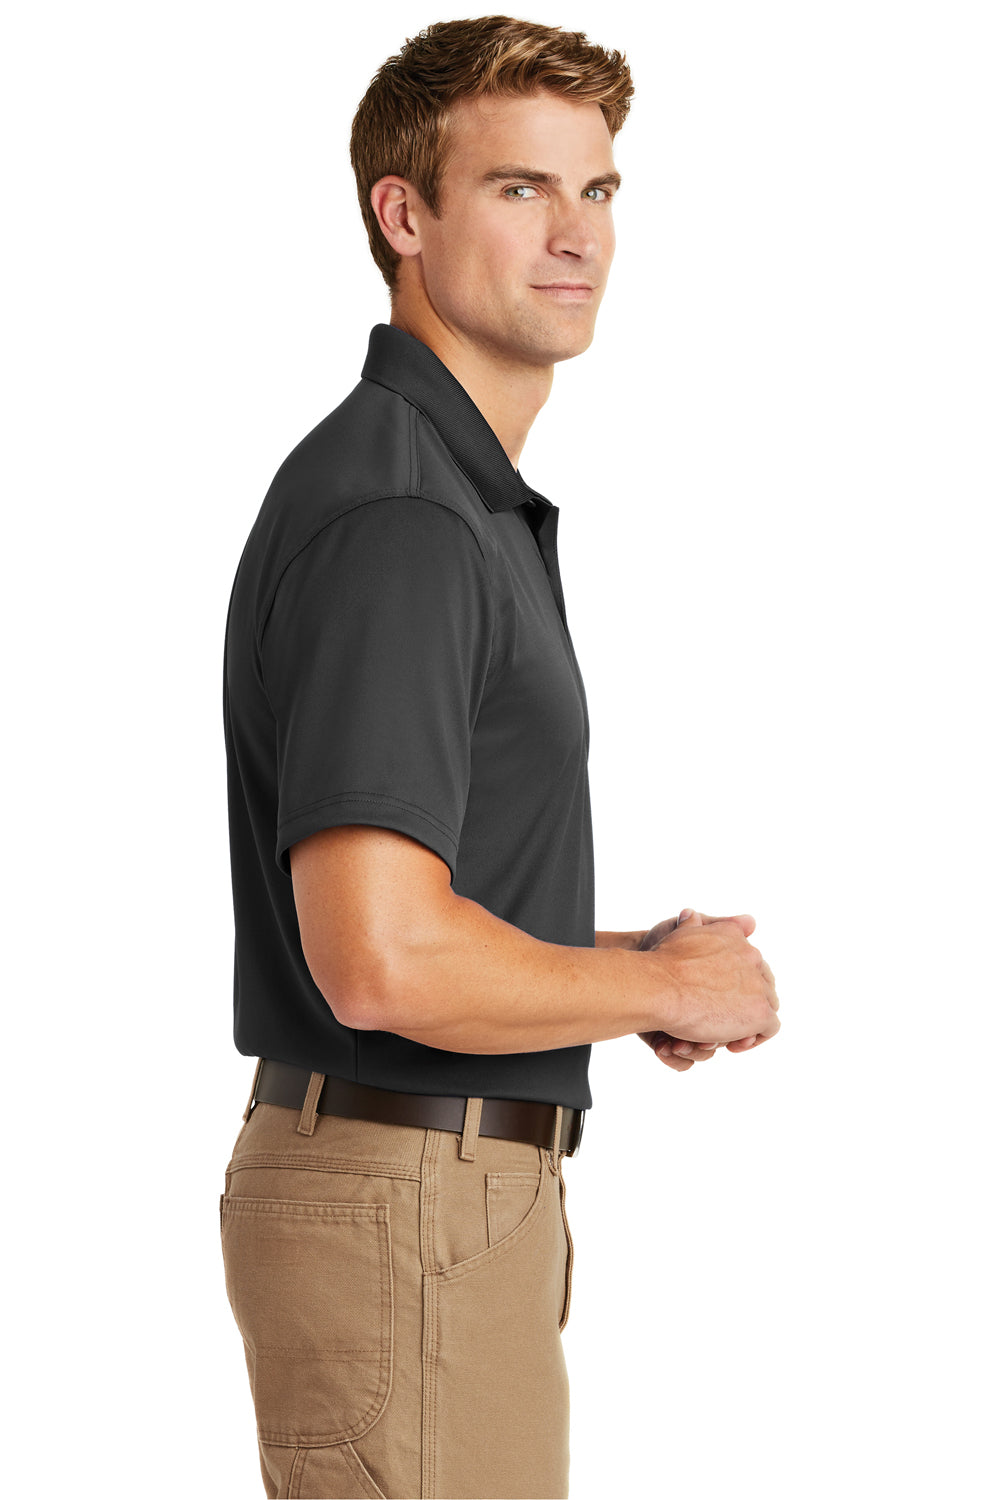 CornerStone CS412 Mens Select Moisture Wicking Short Sleeve Polo Shirt Charcoal Grey Side